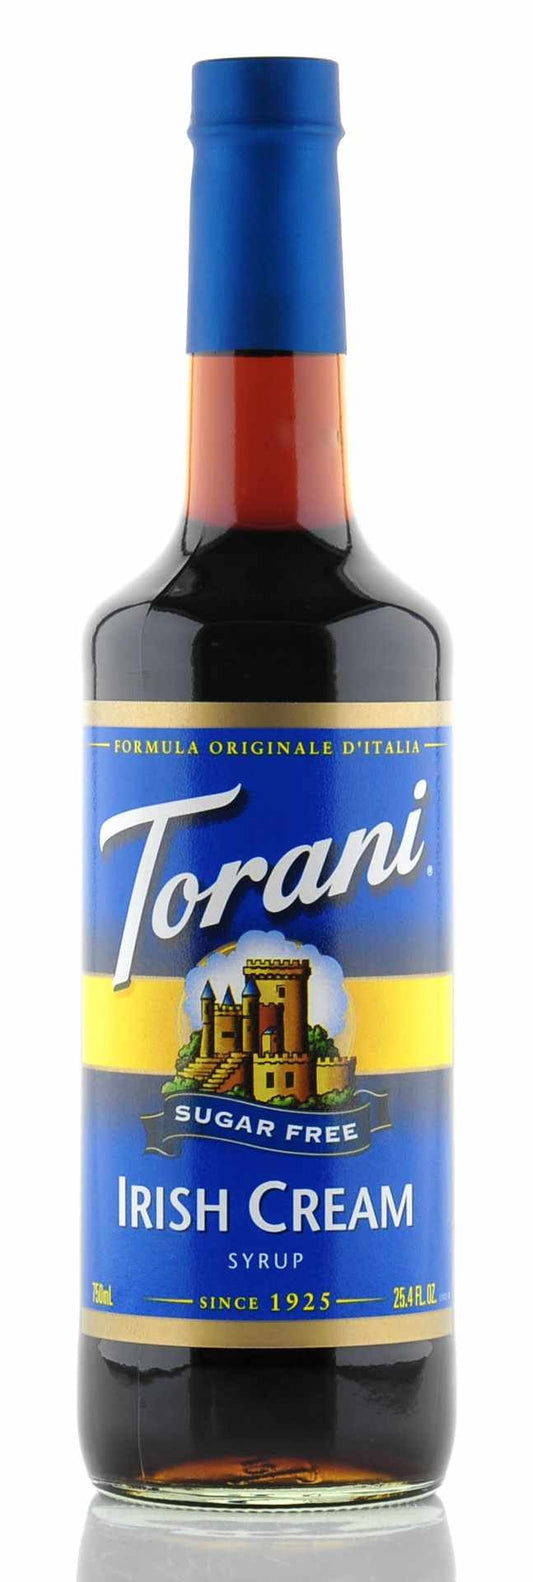 Torani Sirup zuckerfrei Irish Cream Geschmack